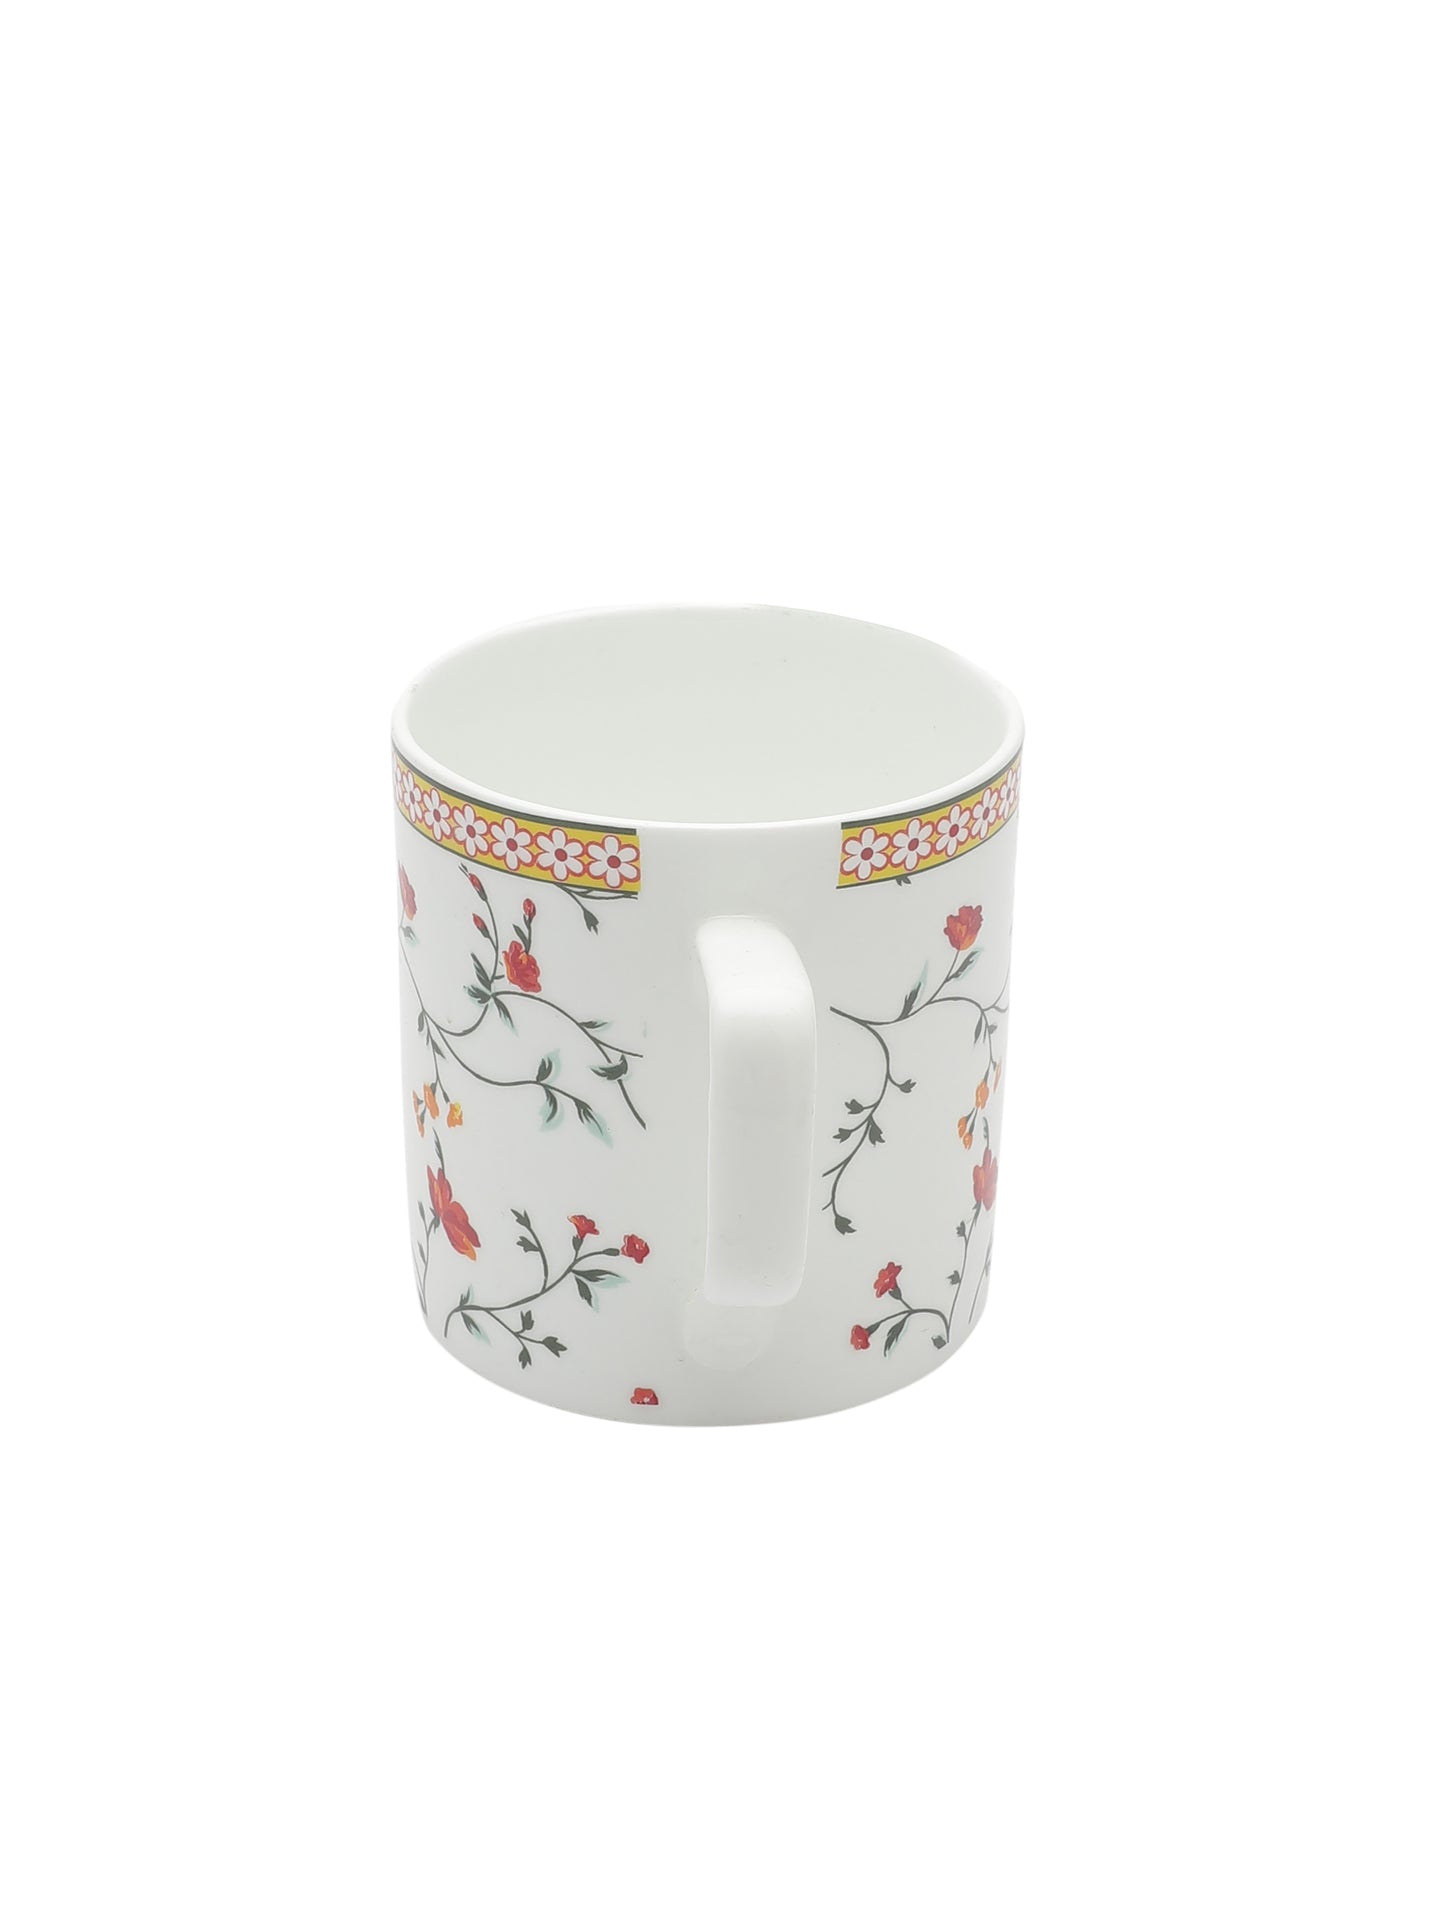 JCPL Gardenia Director Coffee Mug/ Tea Cup, 220ml, Set of 6, GS301